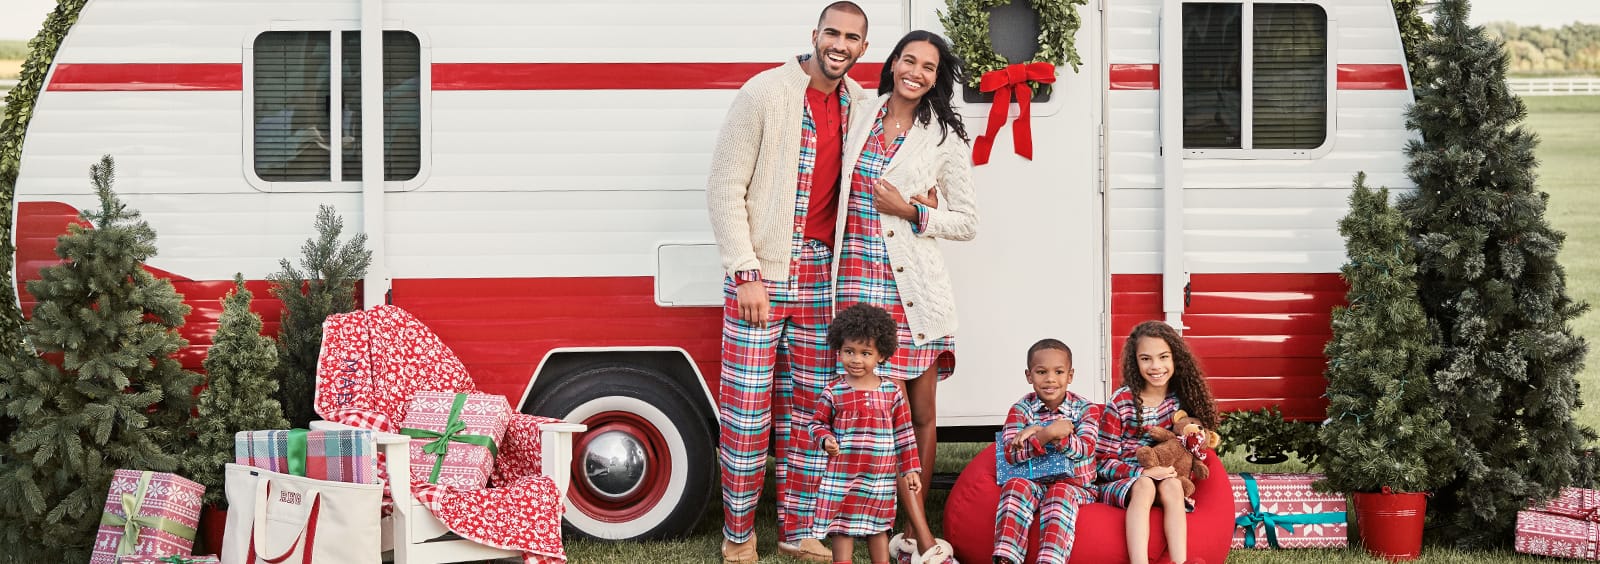 Matching Family Pajamas You Need This Holiday Season | Lands' End